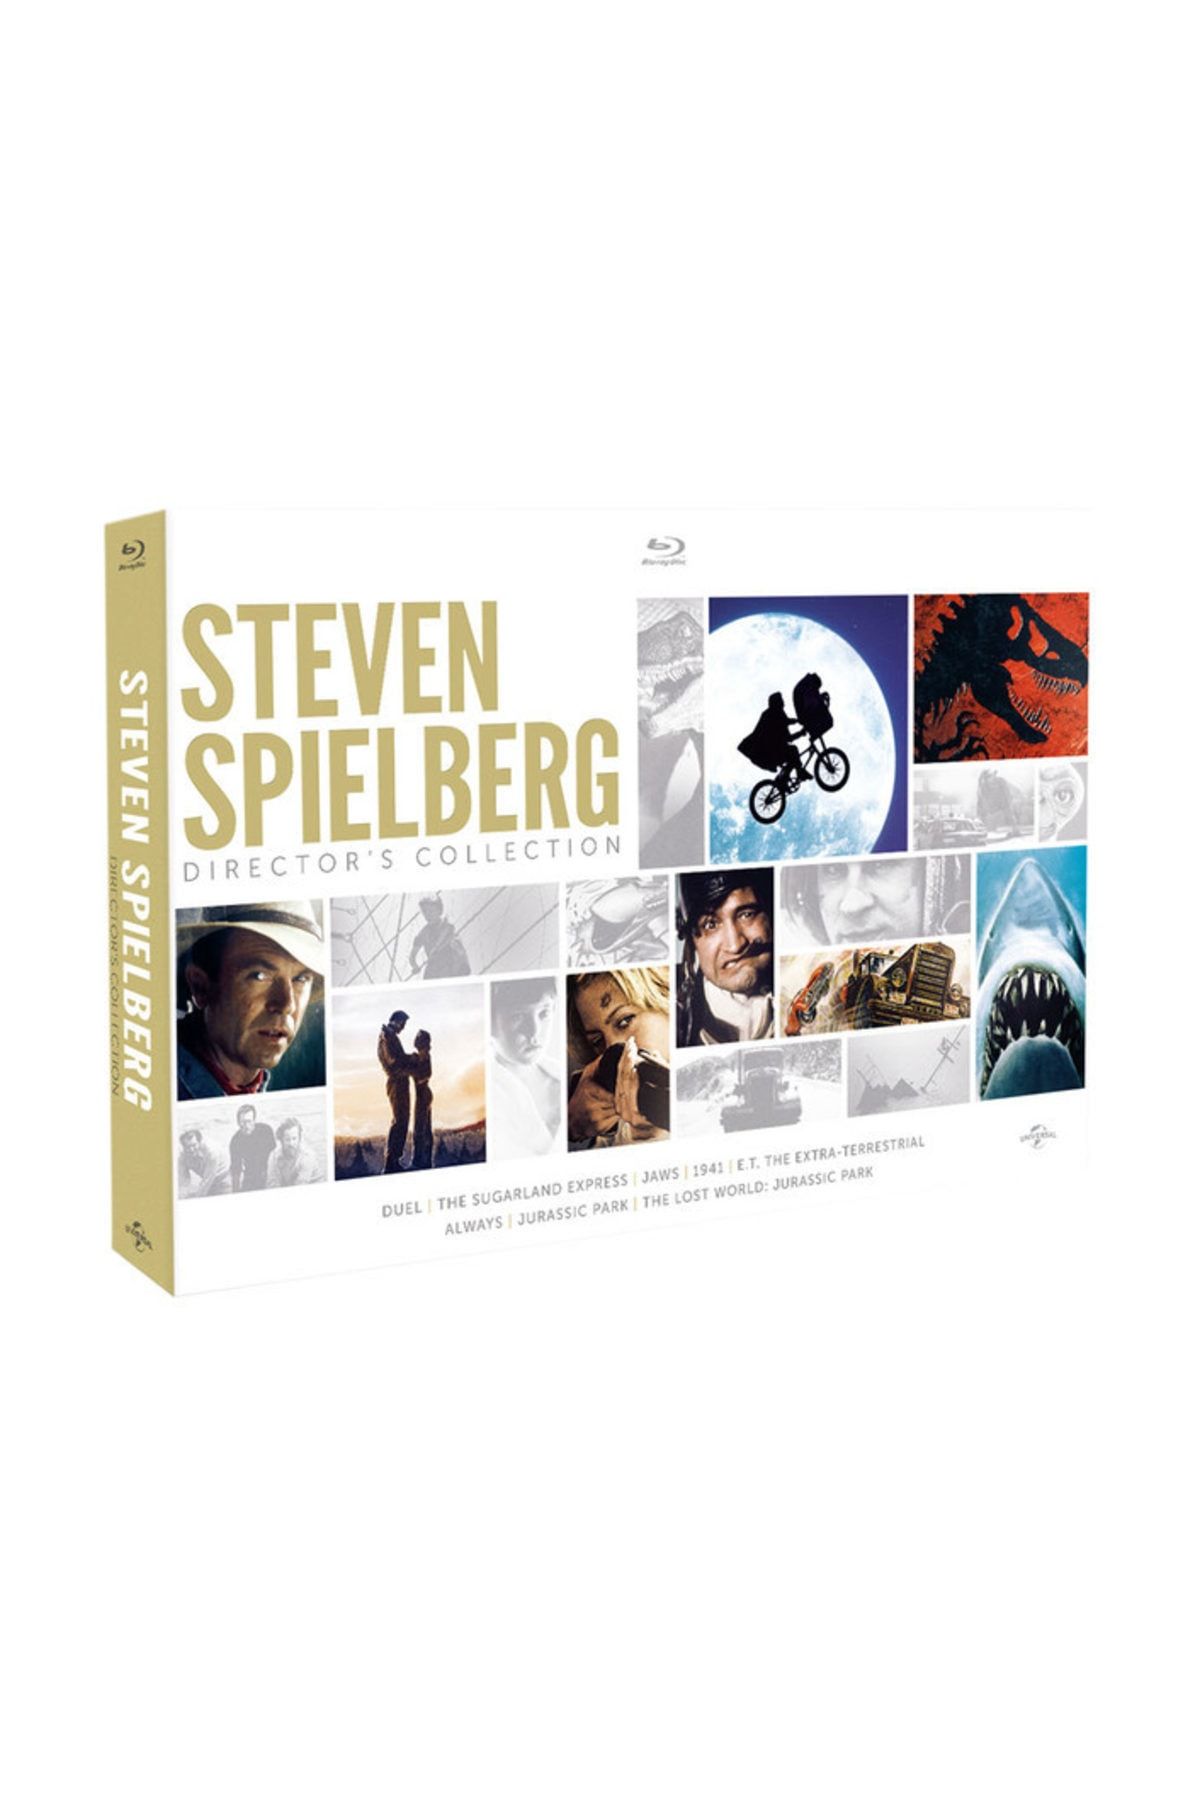 Pal BLU RAY-Steven Spielberg Director's Collection (9 Blu Ray ömür boyu saklanacak harika bir set)